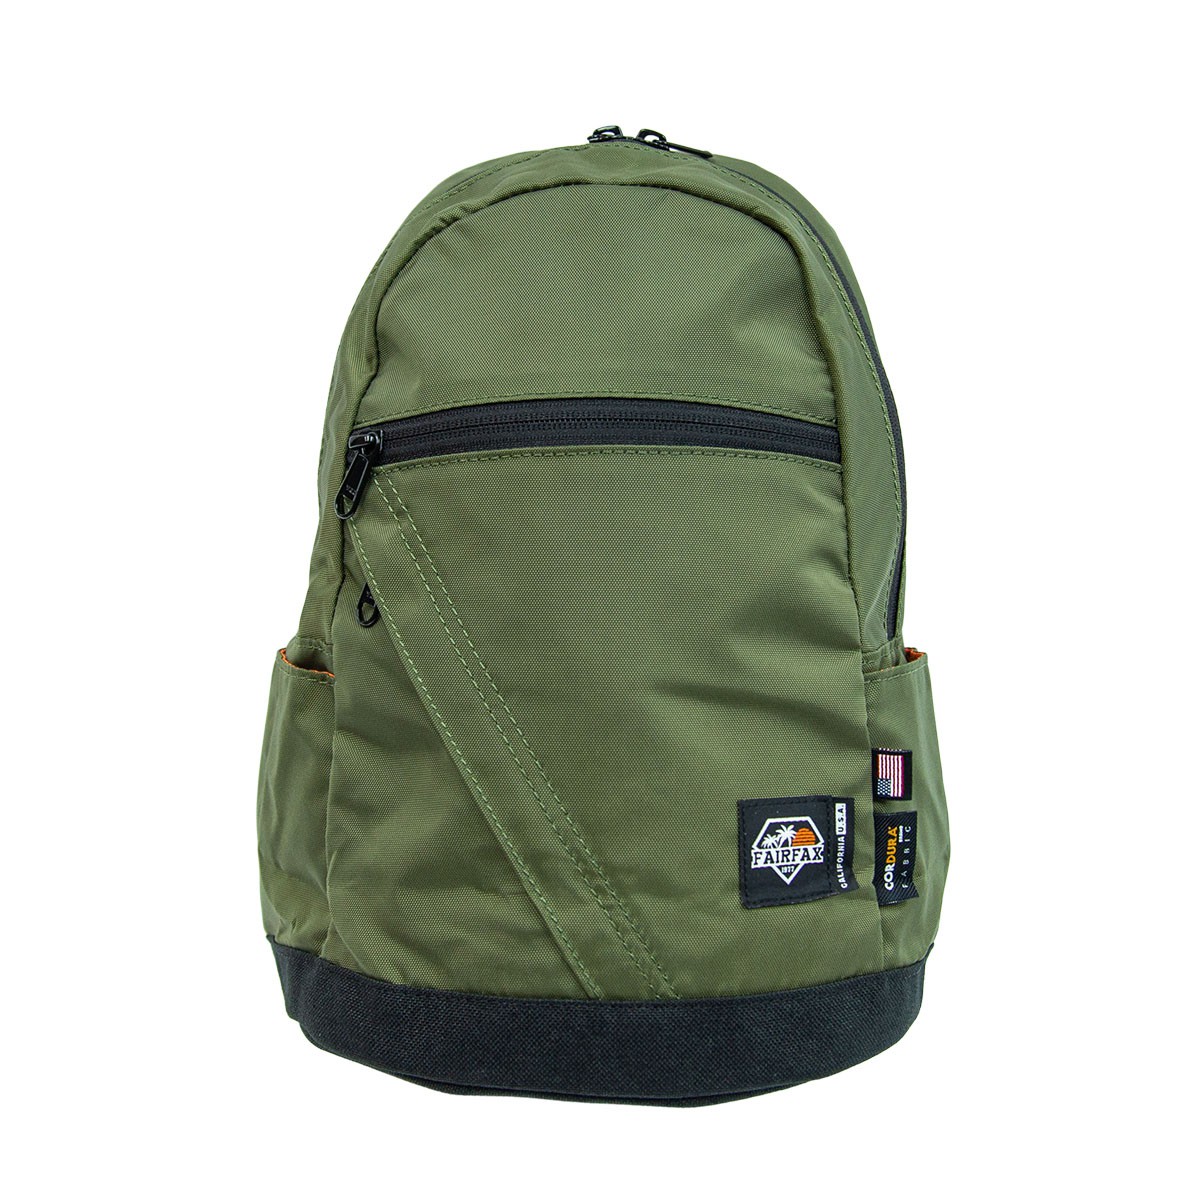 Fairfax 新色 Mini Backpack 迷你背囊 小背包 FF2000 